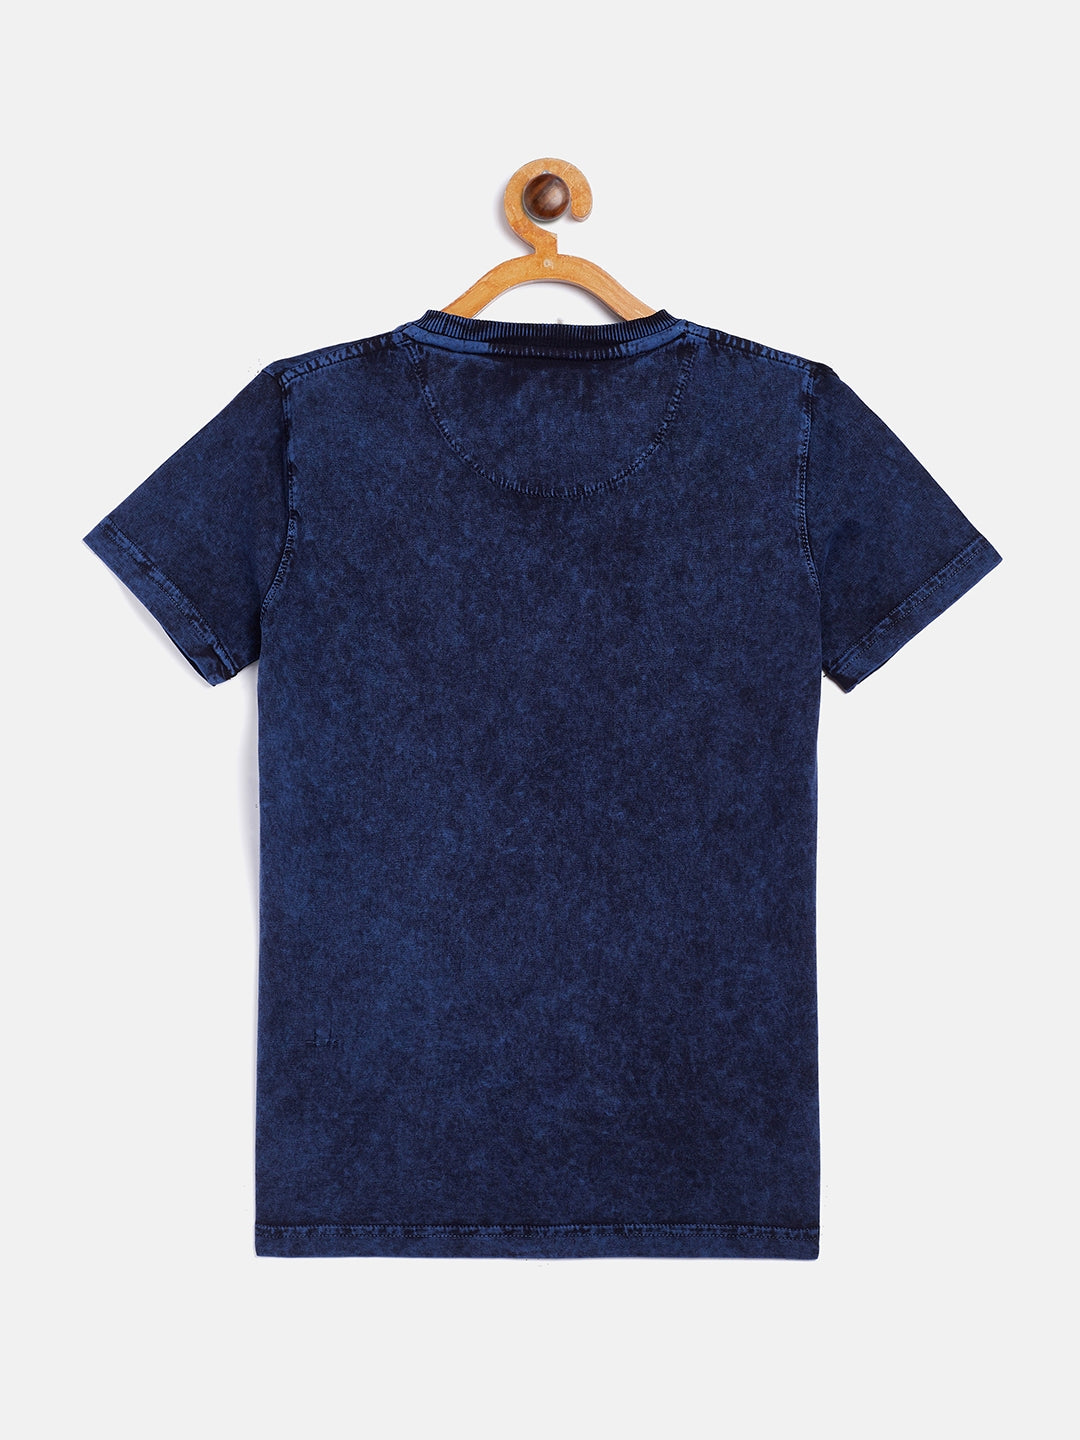 Blue Printed Round Neck T-Shirt - Boys T-Shirts